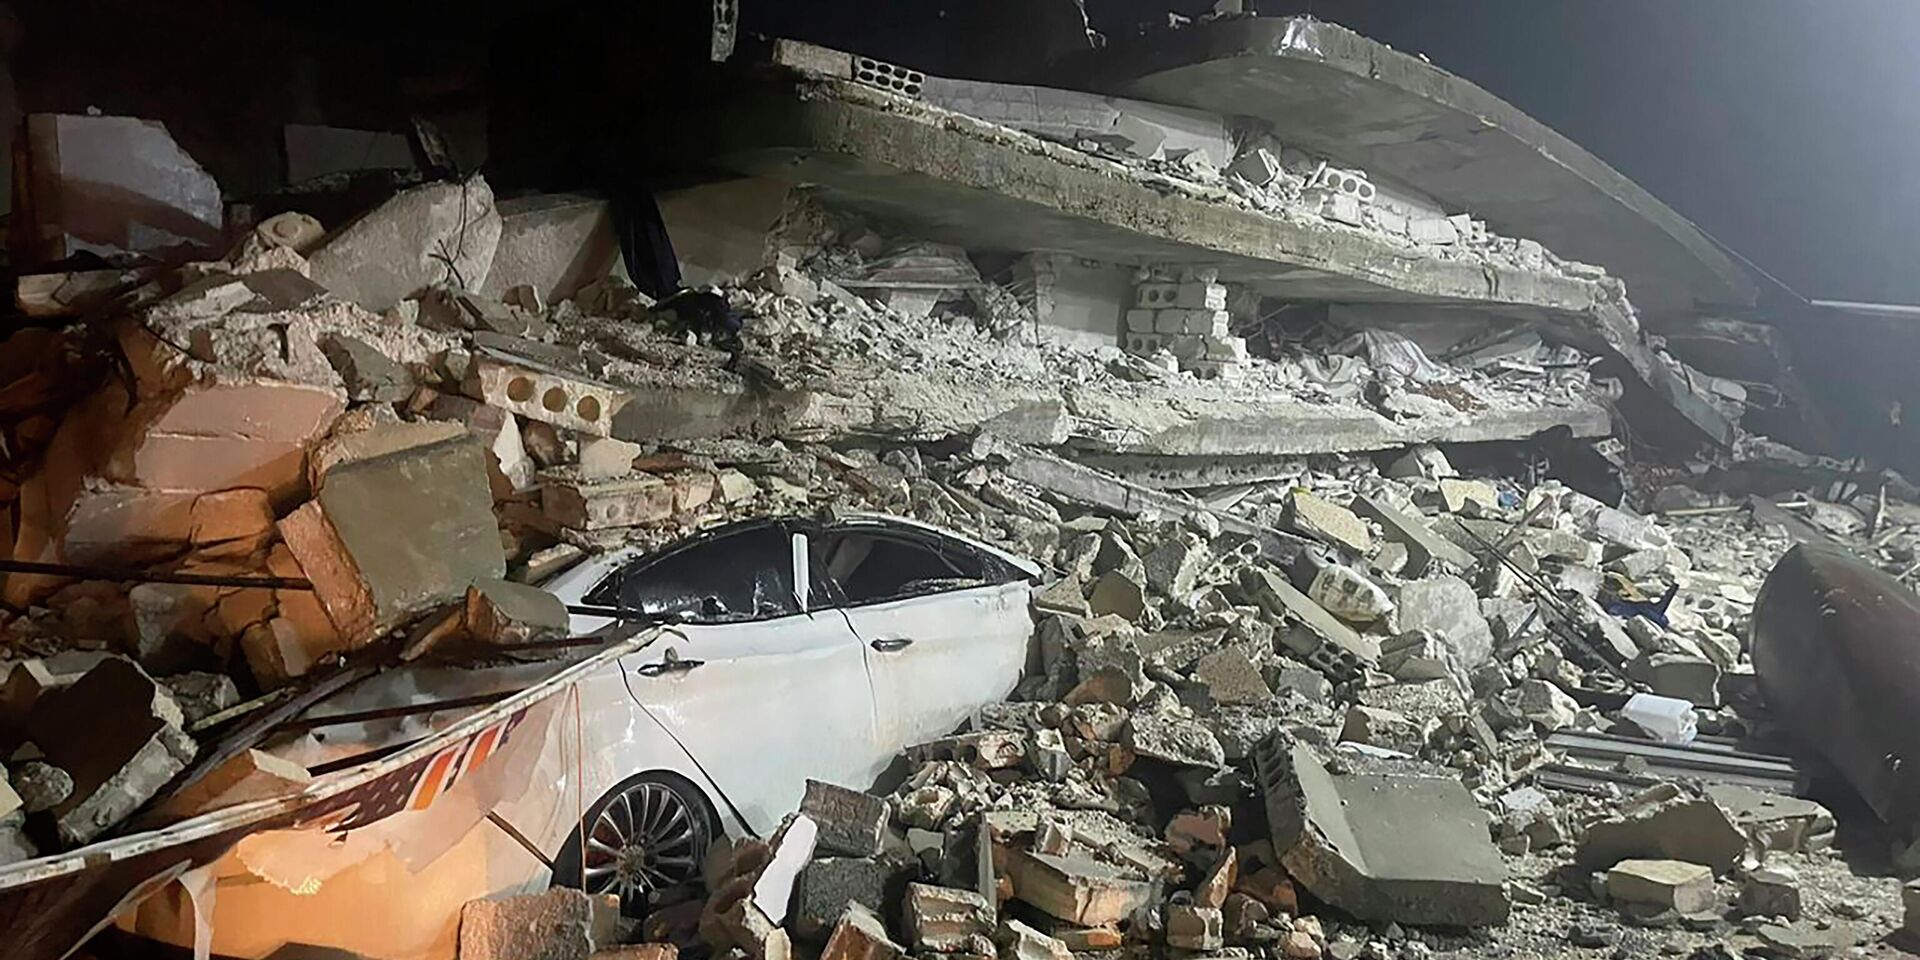 Последствия землетрясения в городе Азмарин, провинция Идлиб, Сирия. 6 февраля 2023 года - ИноСМИ, 1920, 27.02.2023